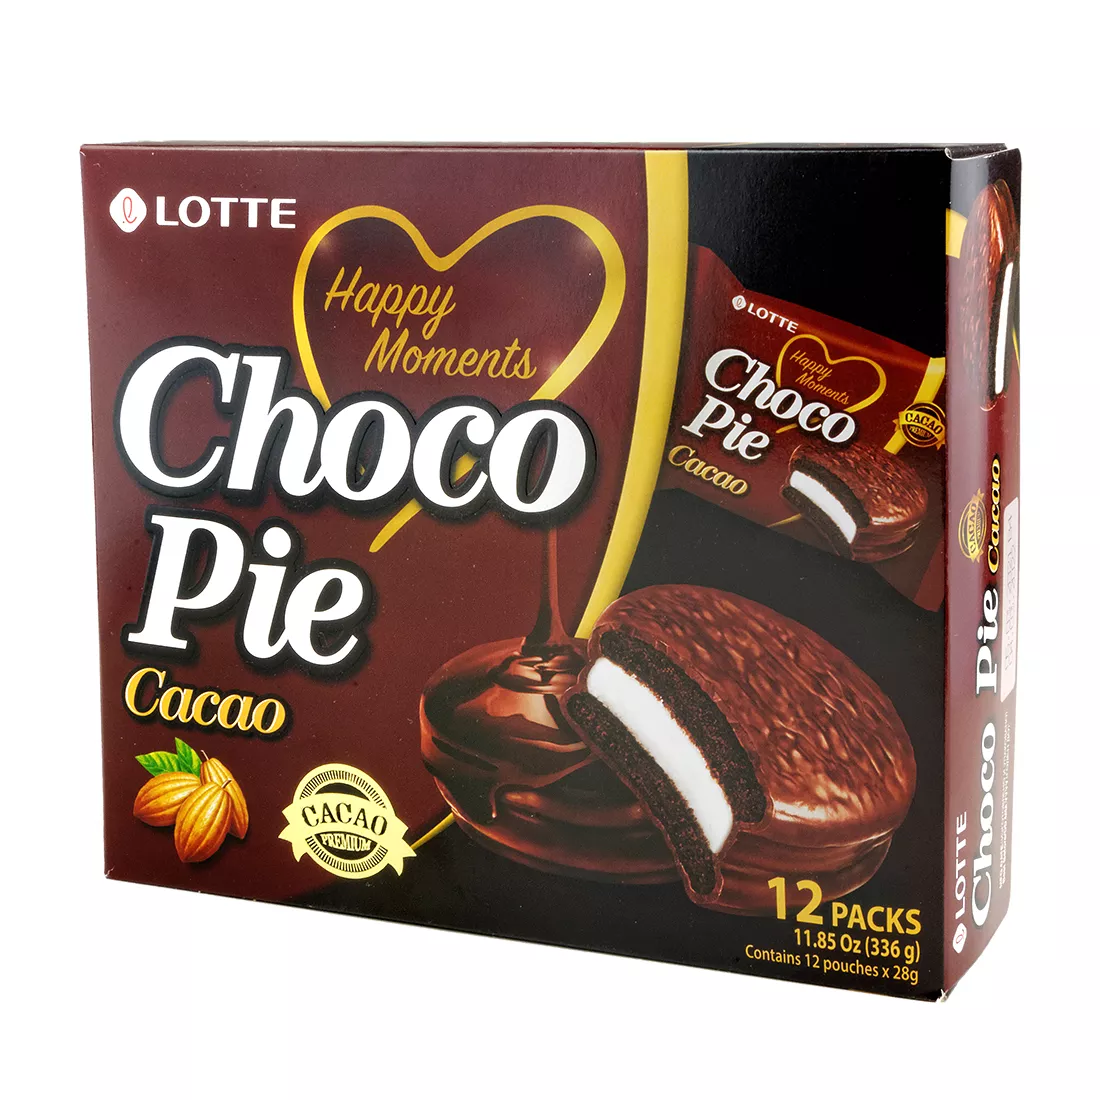 Prajitura Choco Pie cu cacao LOTTE (12 x 28g) 336g, [],asianfood.ro